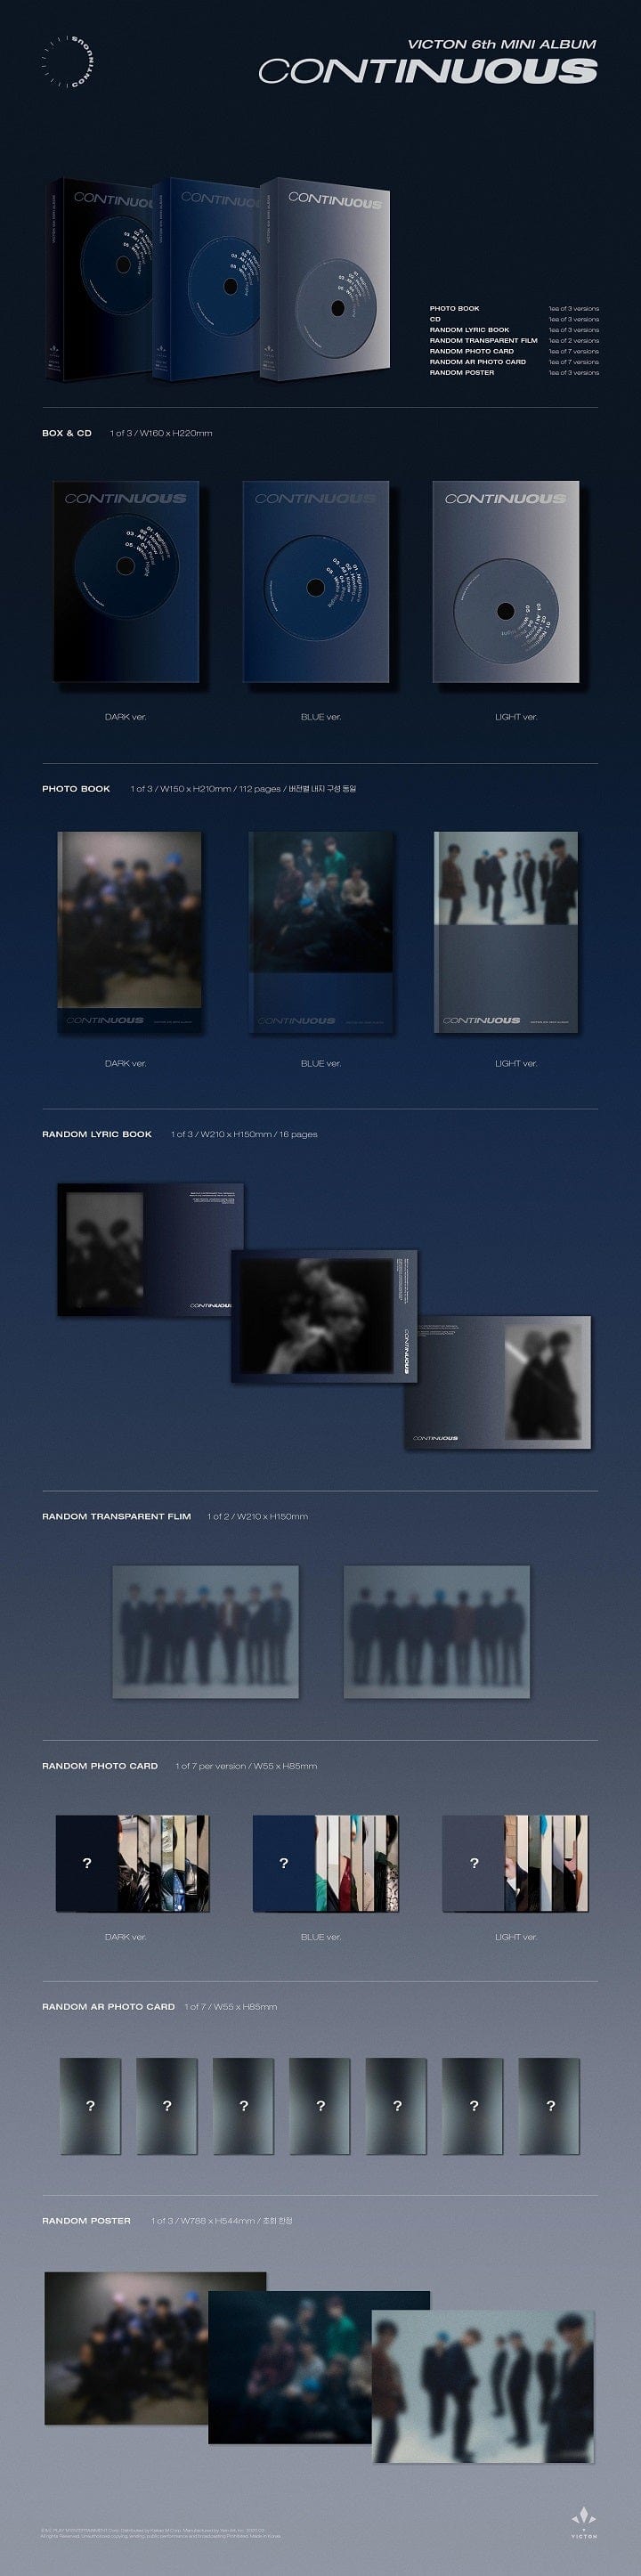 Korea Pop Store Victon - Continuous (6th Mini Album) Kawaii Gifts 8804775140082